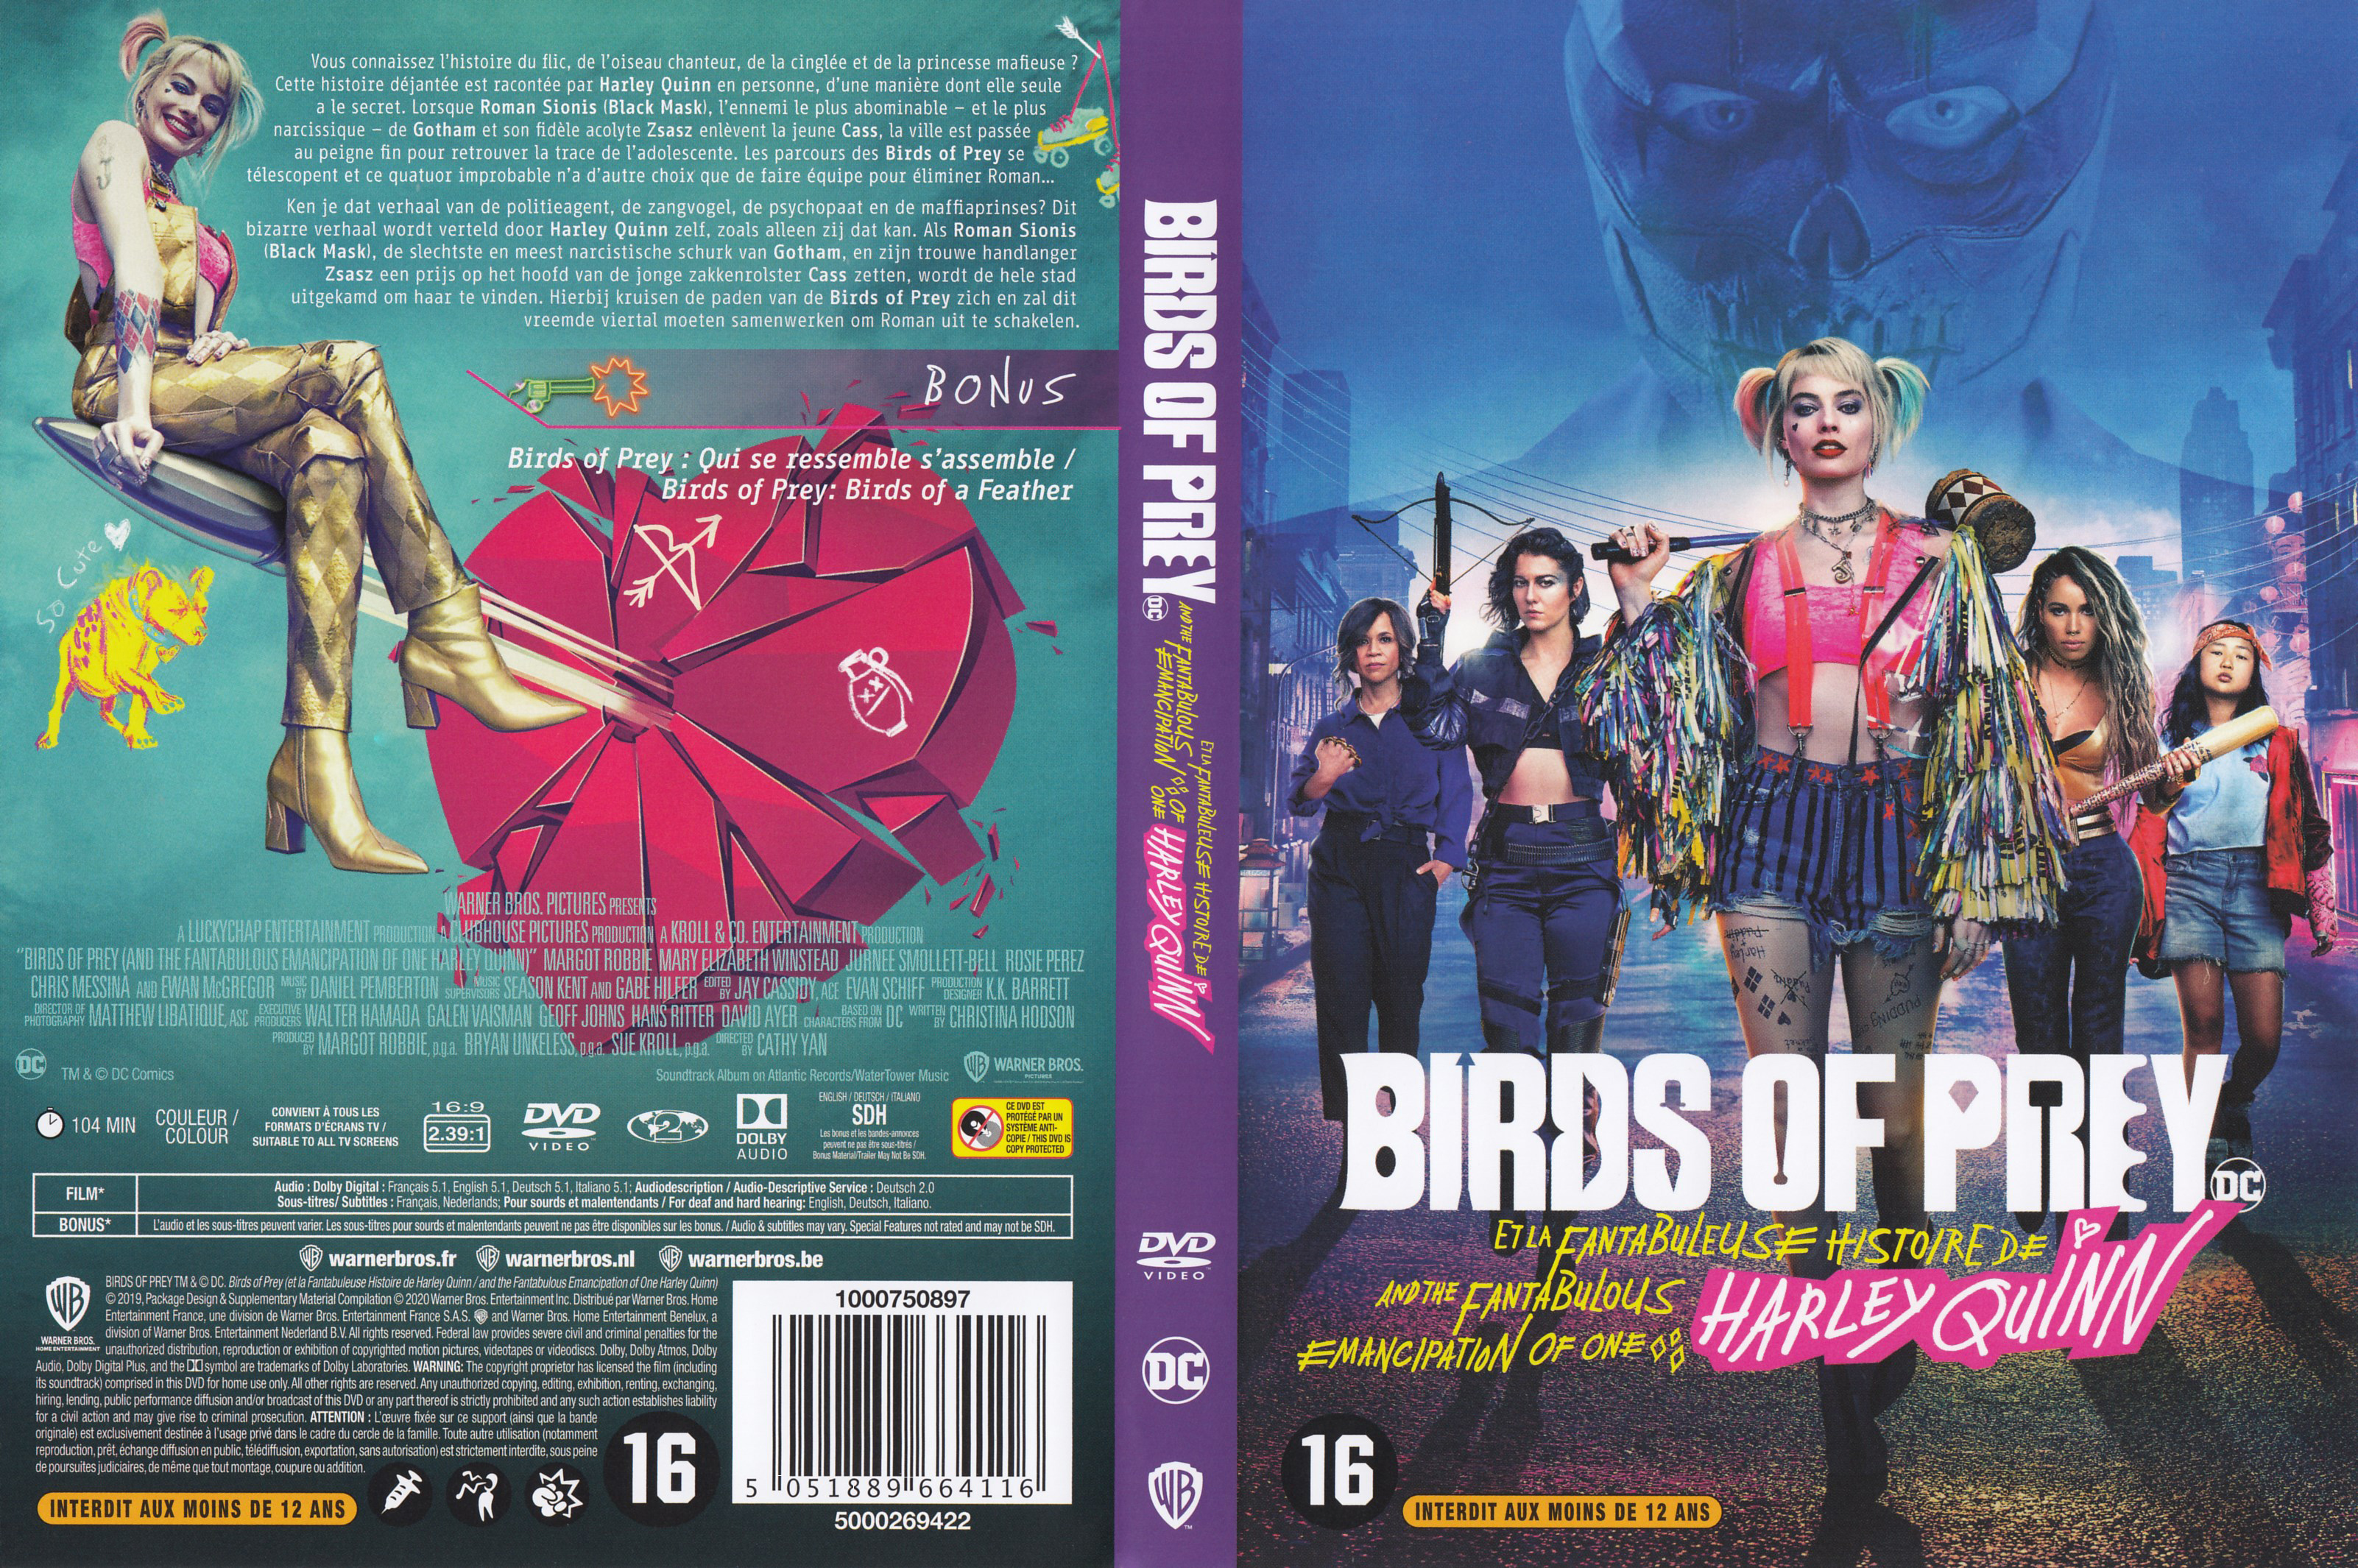 Jaquette DVD Birds of prey et la fabuleuse histoire de Harley